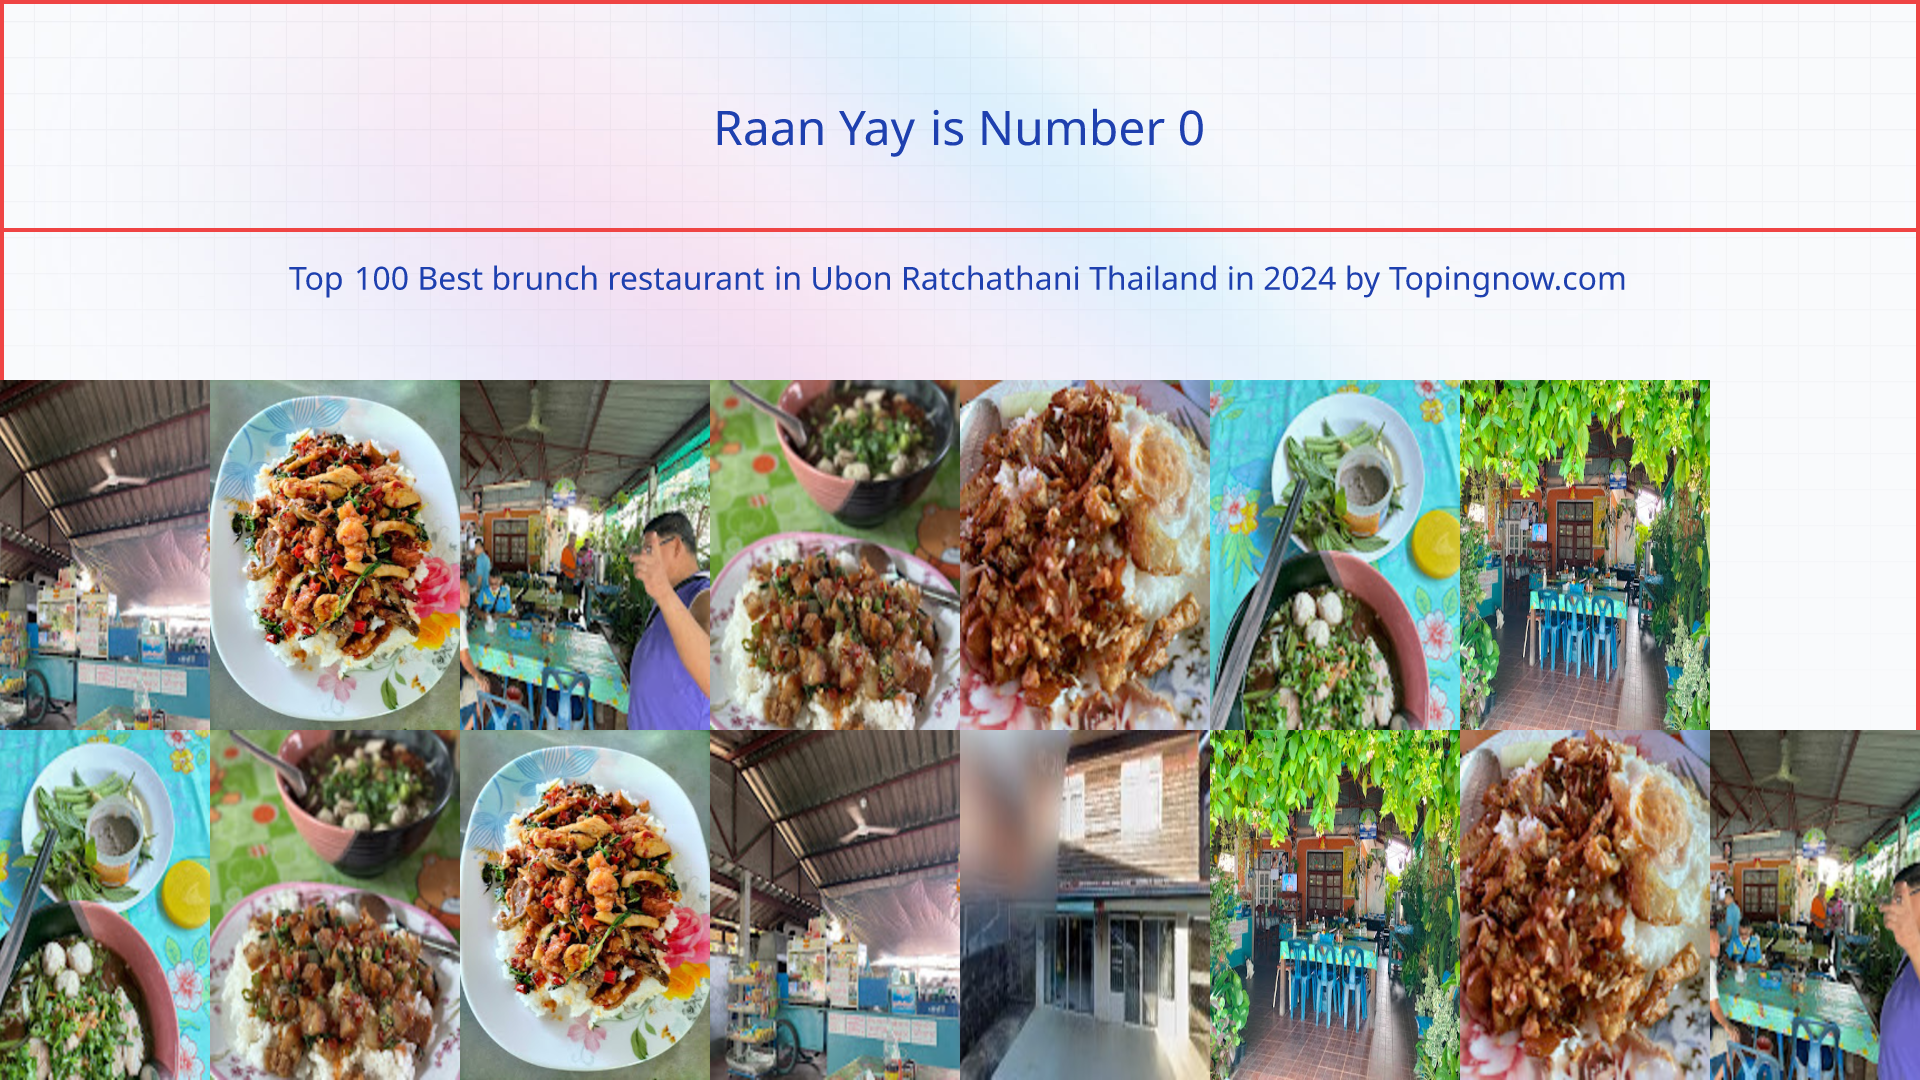 Raan Yay: Top 100 Best brunch restaurant in Ubon Ratchathani Thailand in 2024